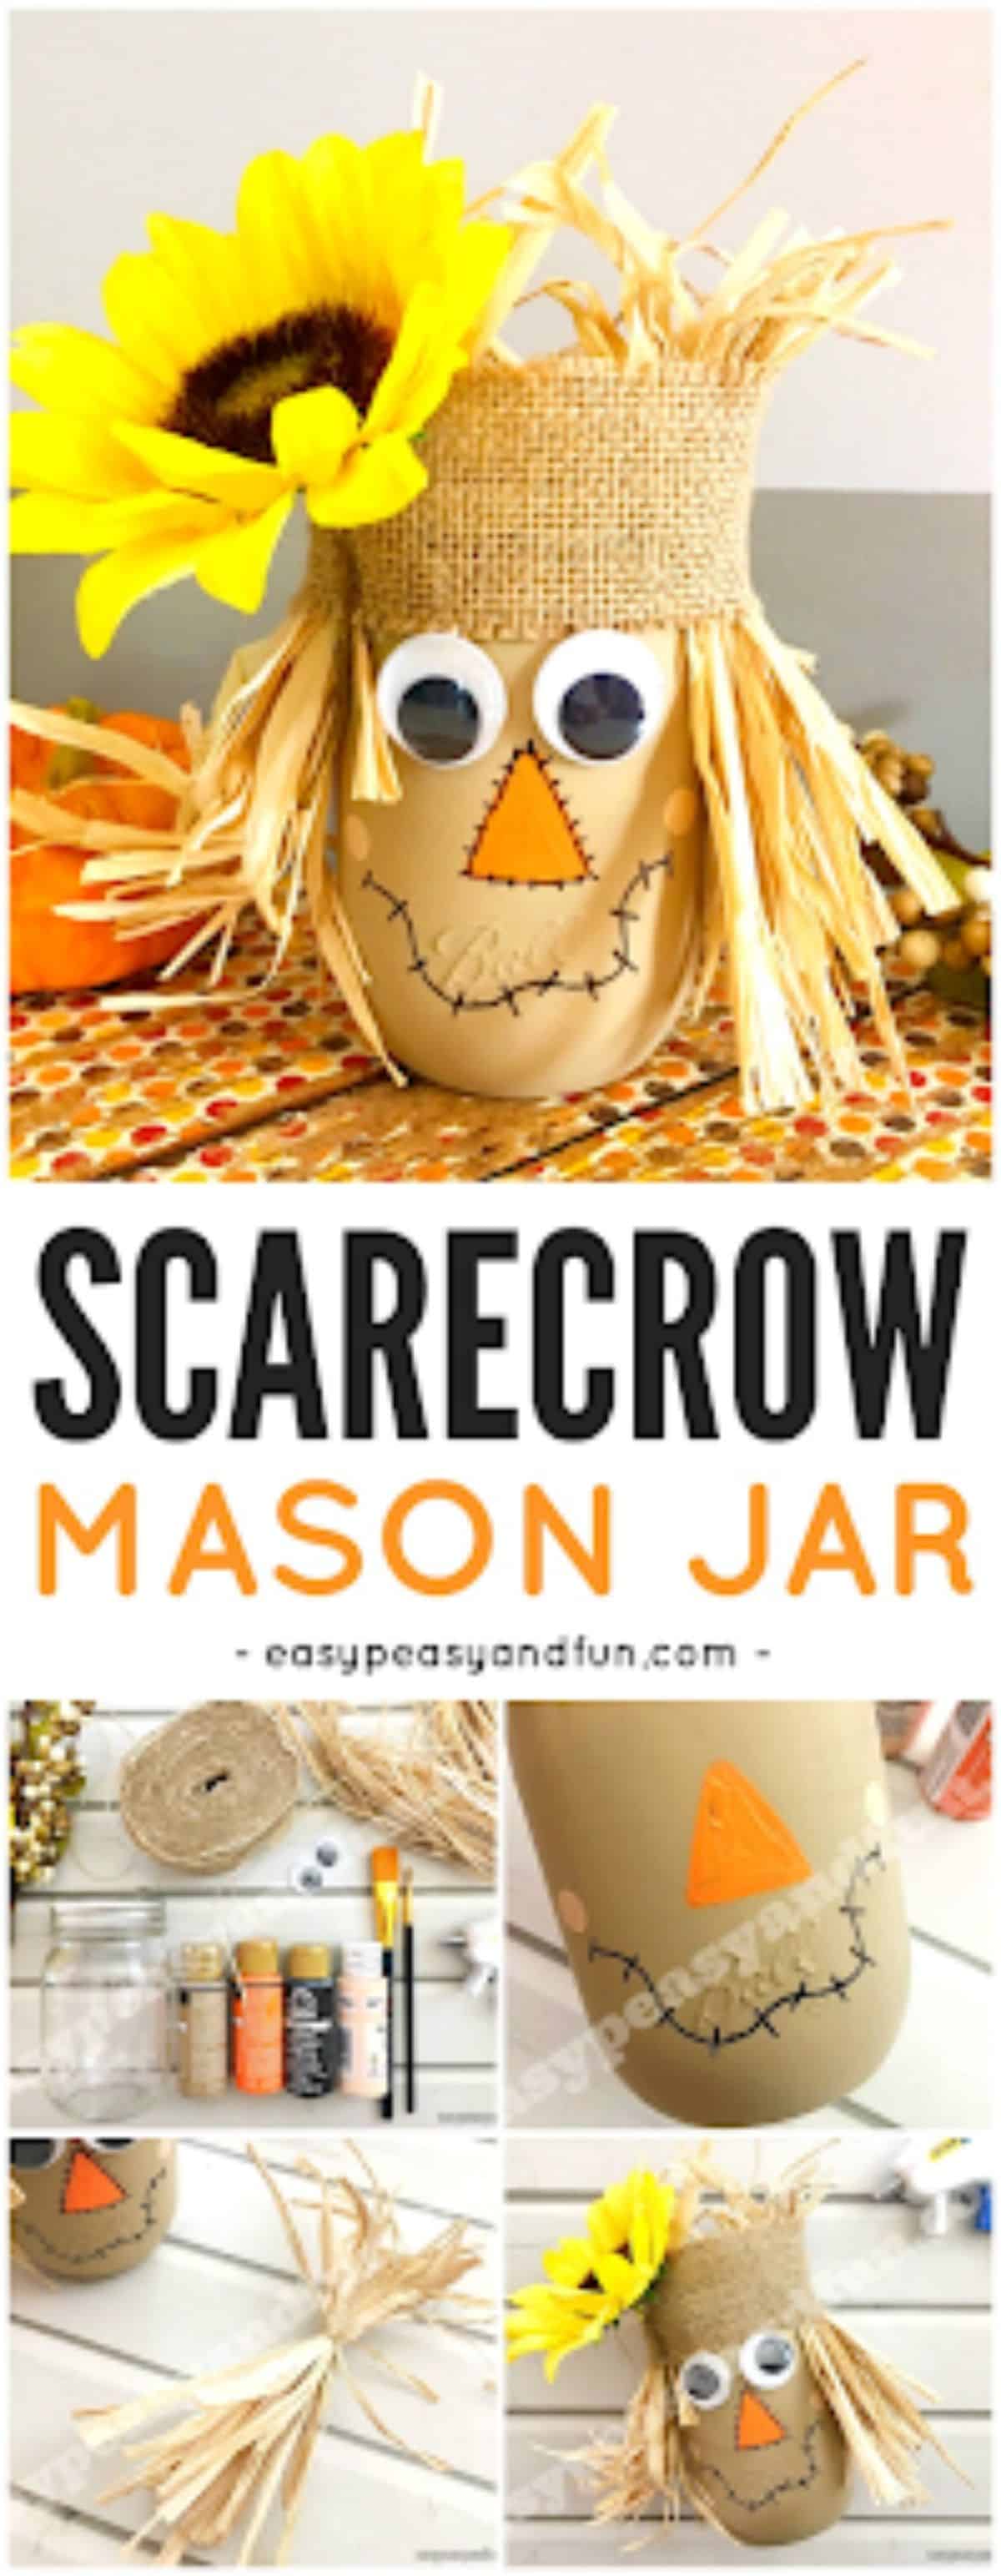 Mason Jar Scarecrow Head